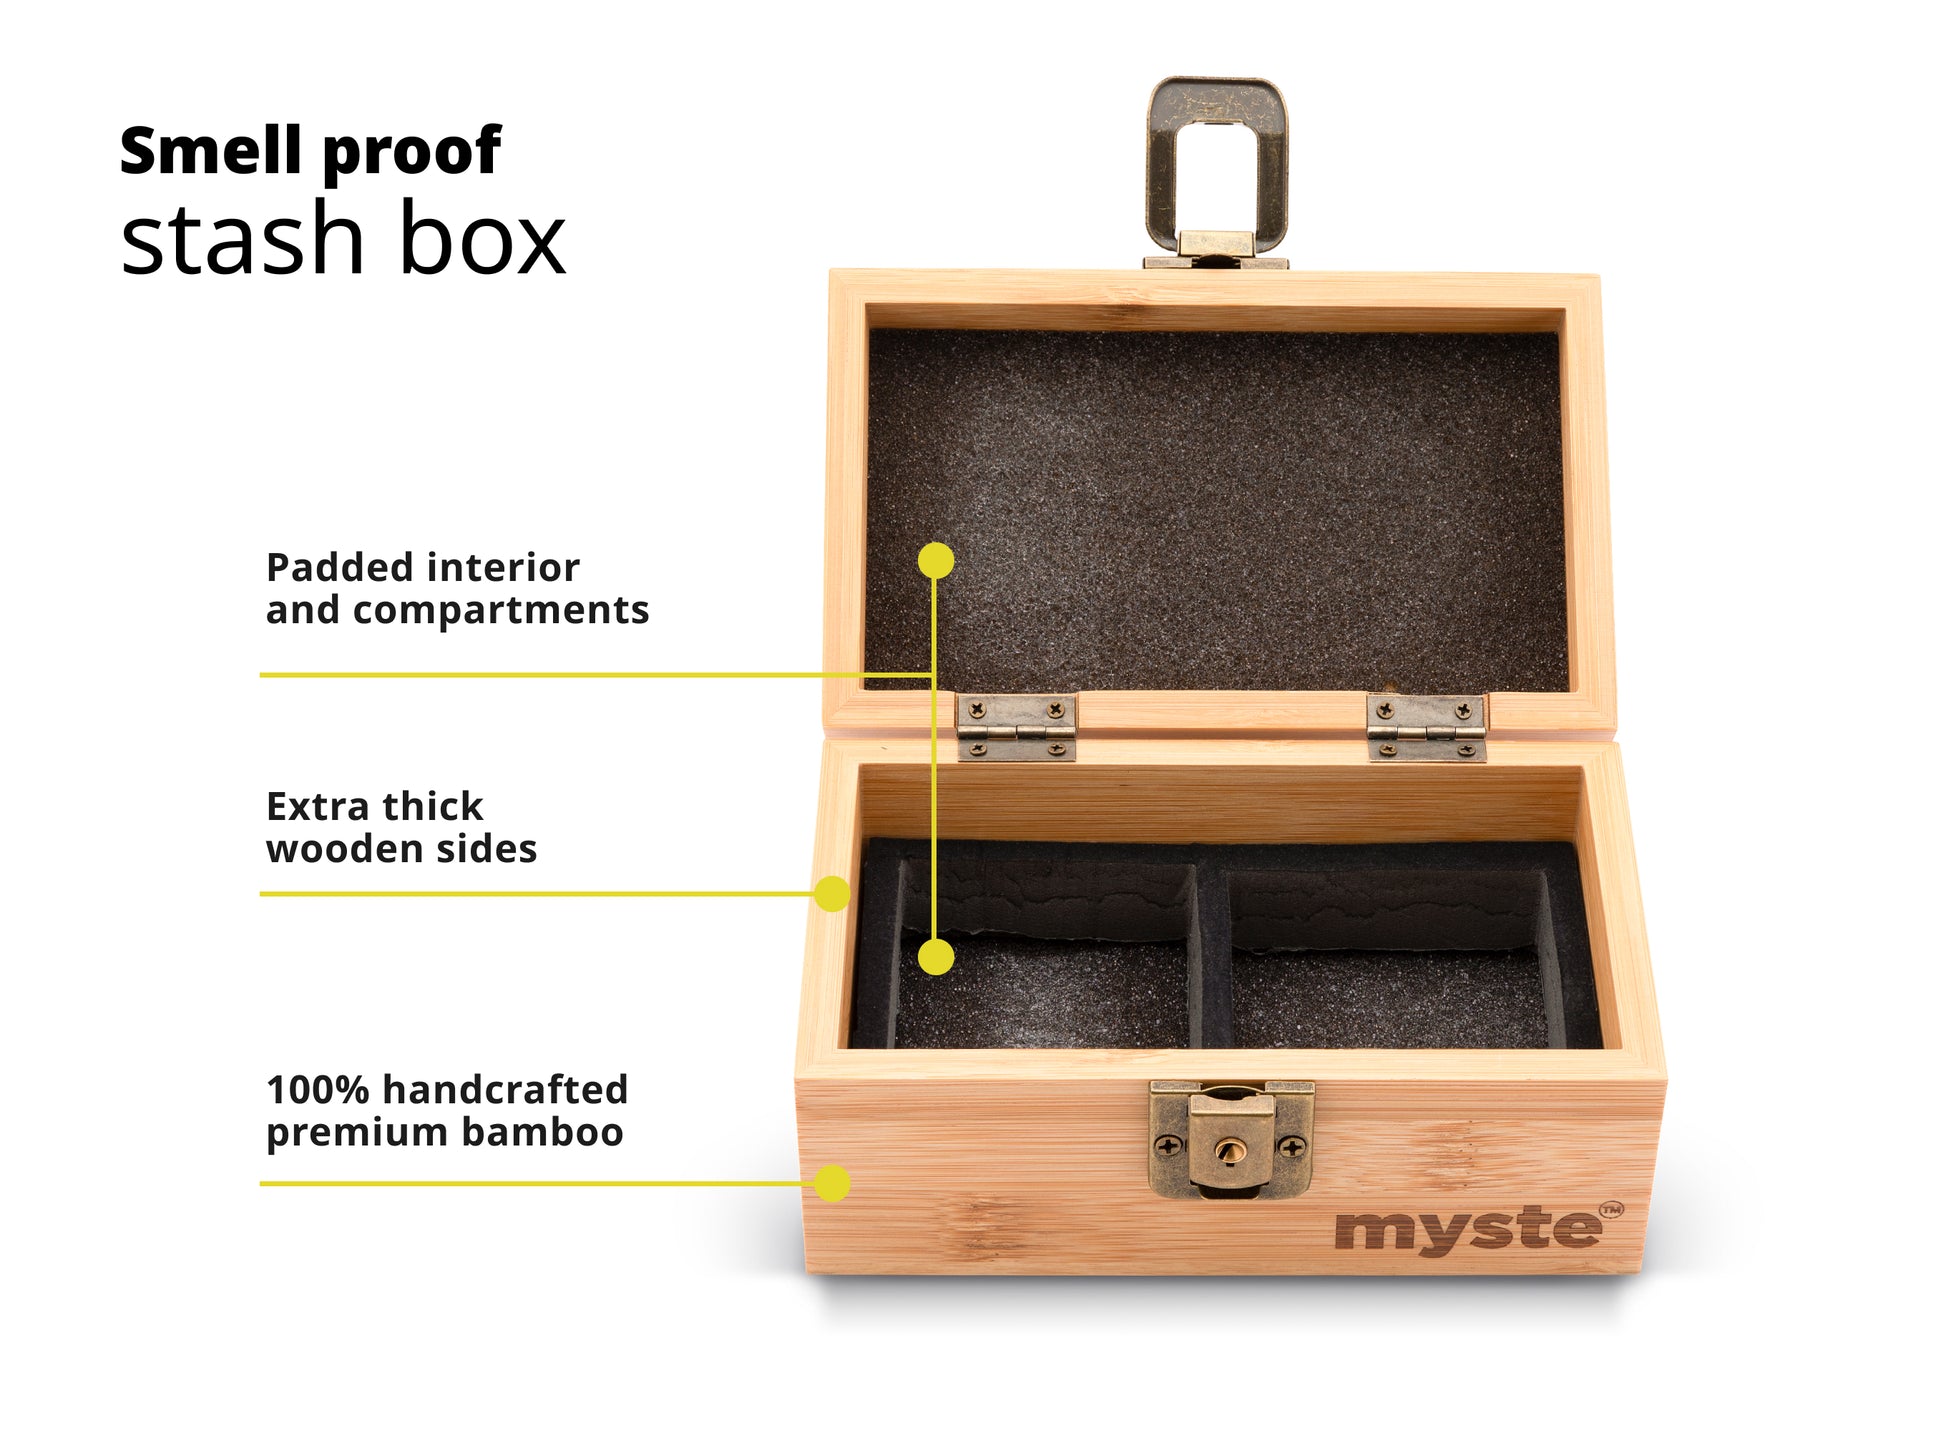 The Black Box • Premium Locking Stash Box • 63mm Grinder & 2